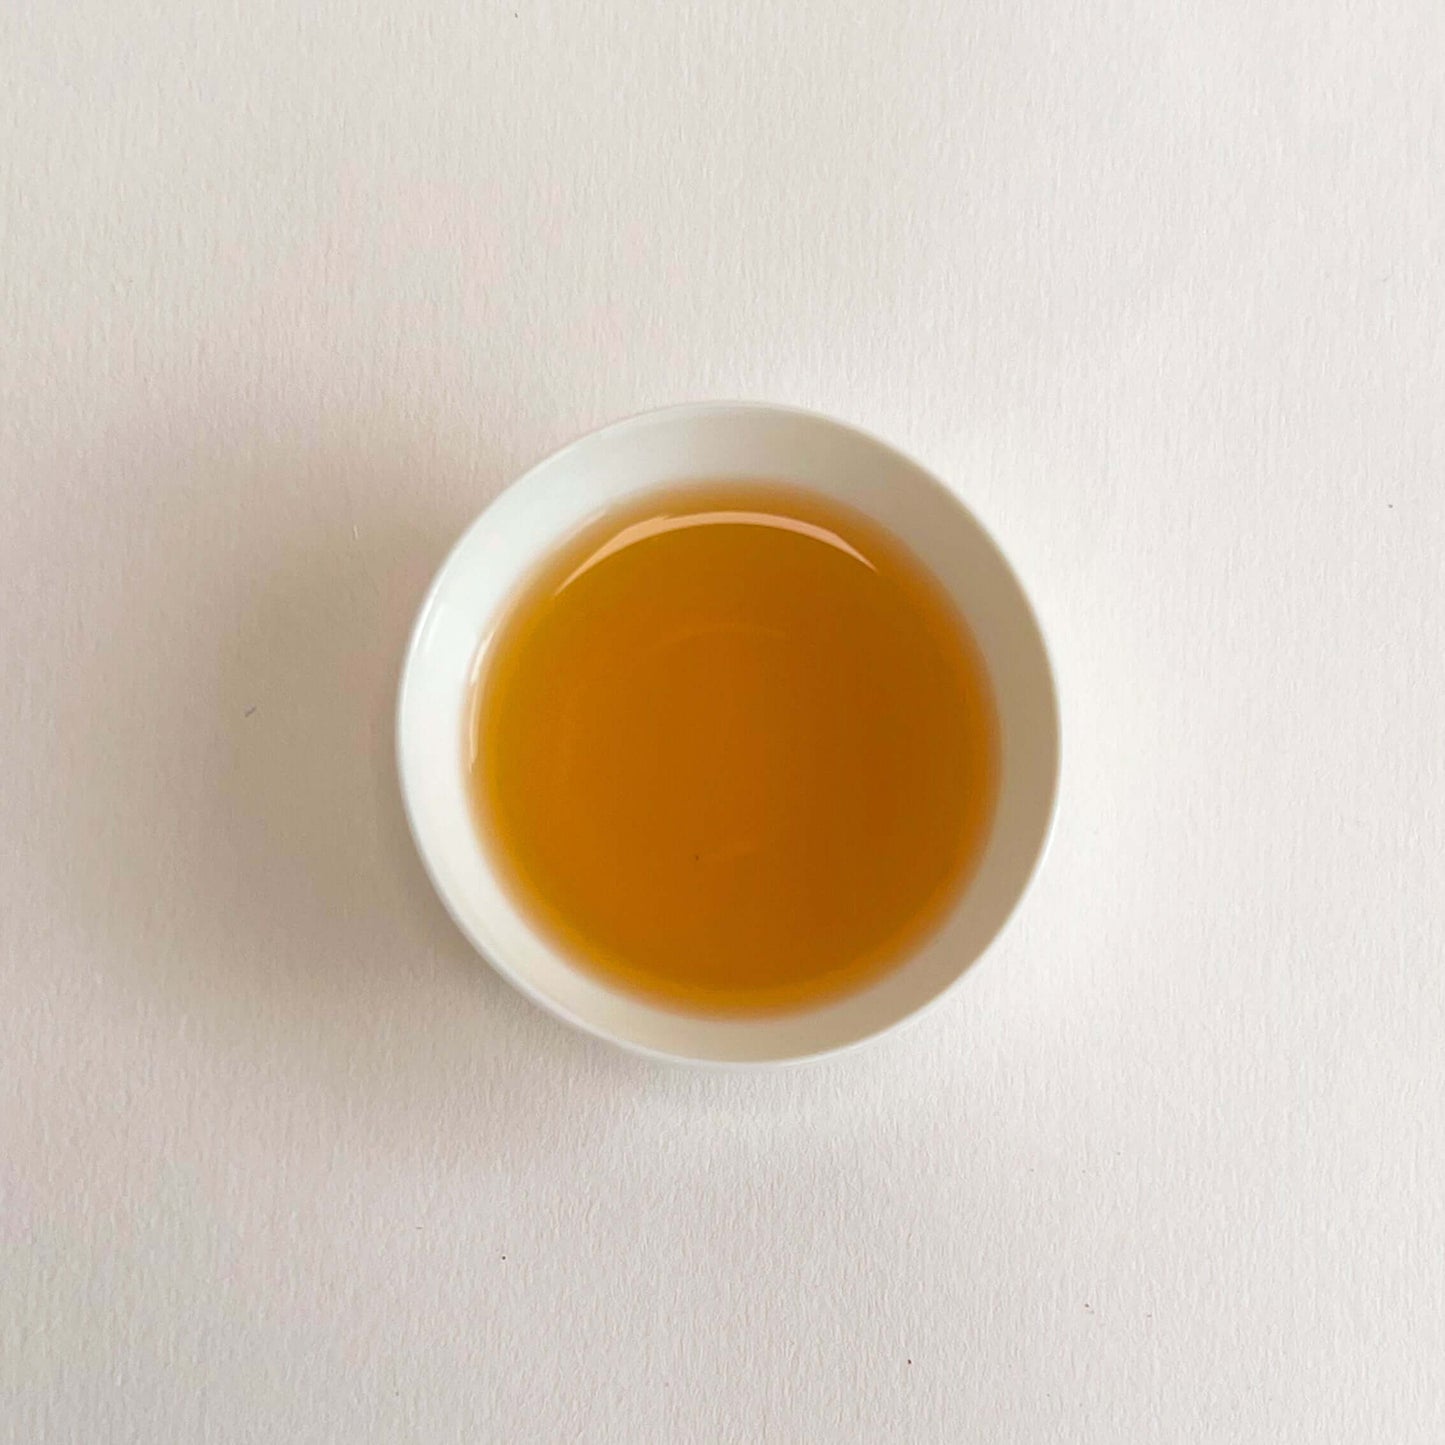 Blue tea. Oolong tea. Cliff tea. Rock tea. Da hong pao. Beautiful tea